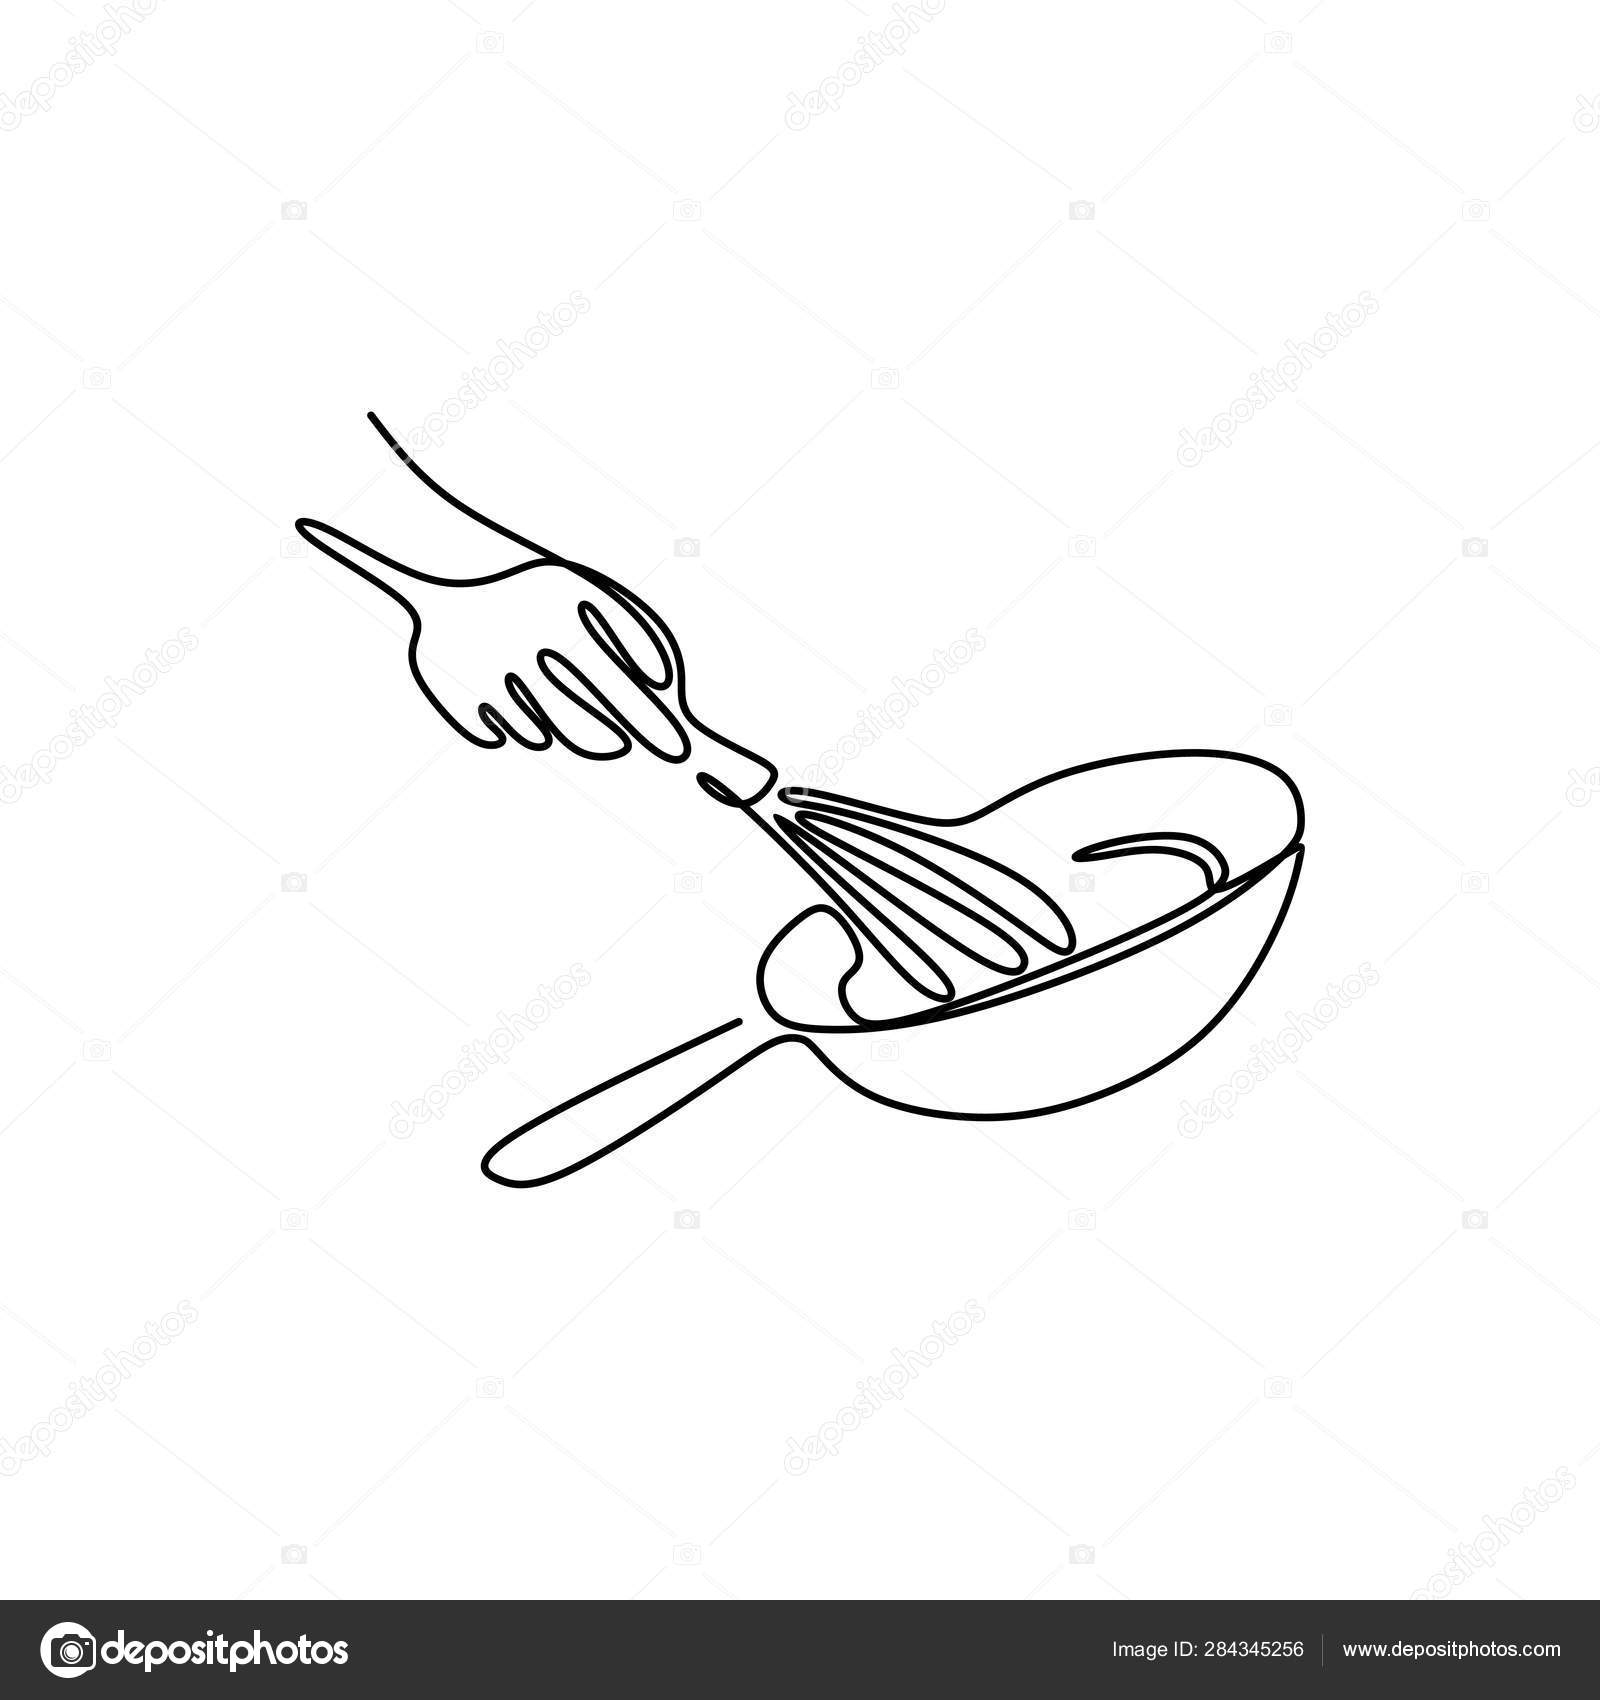 Cooking One Line Drawing Minimalist Design Stock Vector C Ngupakarti 284345256